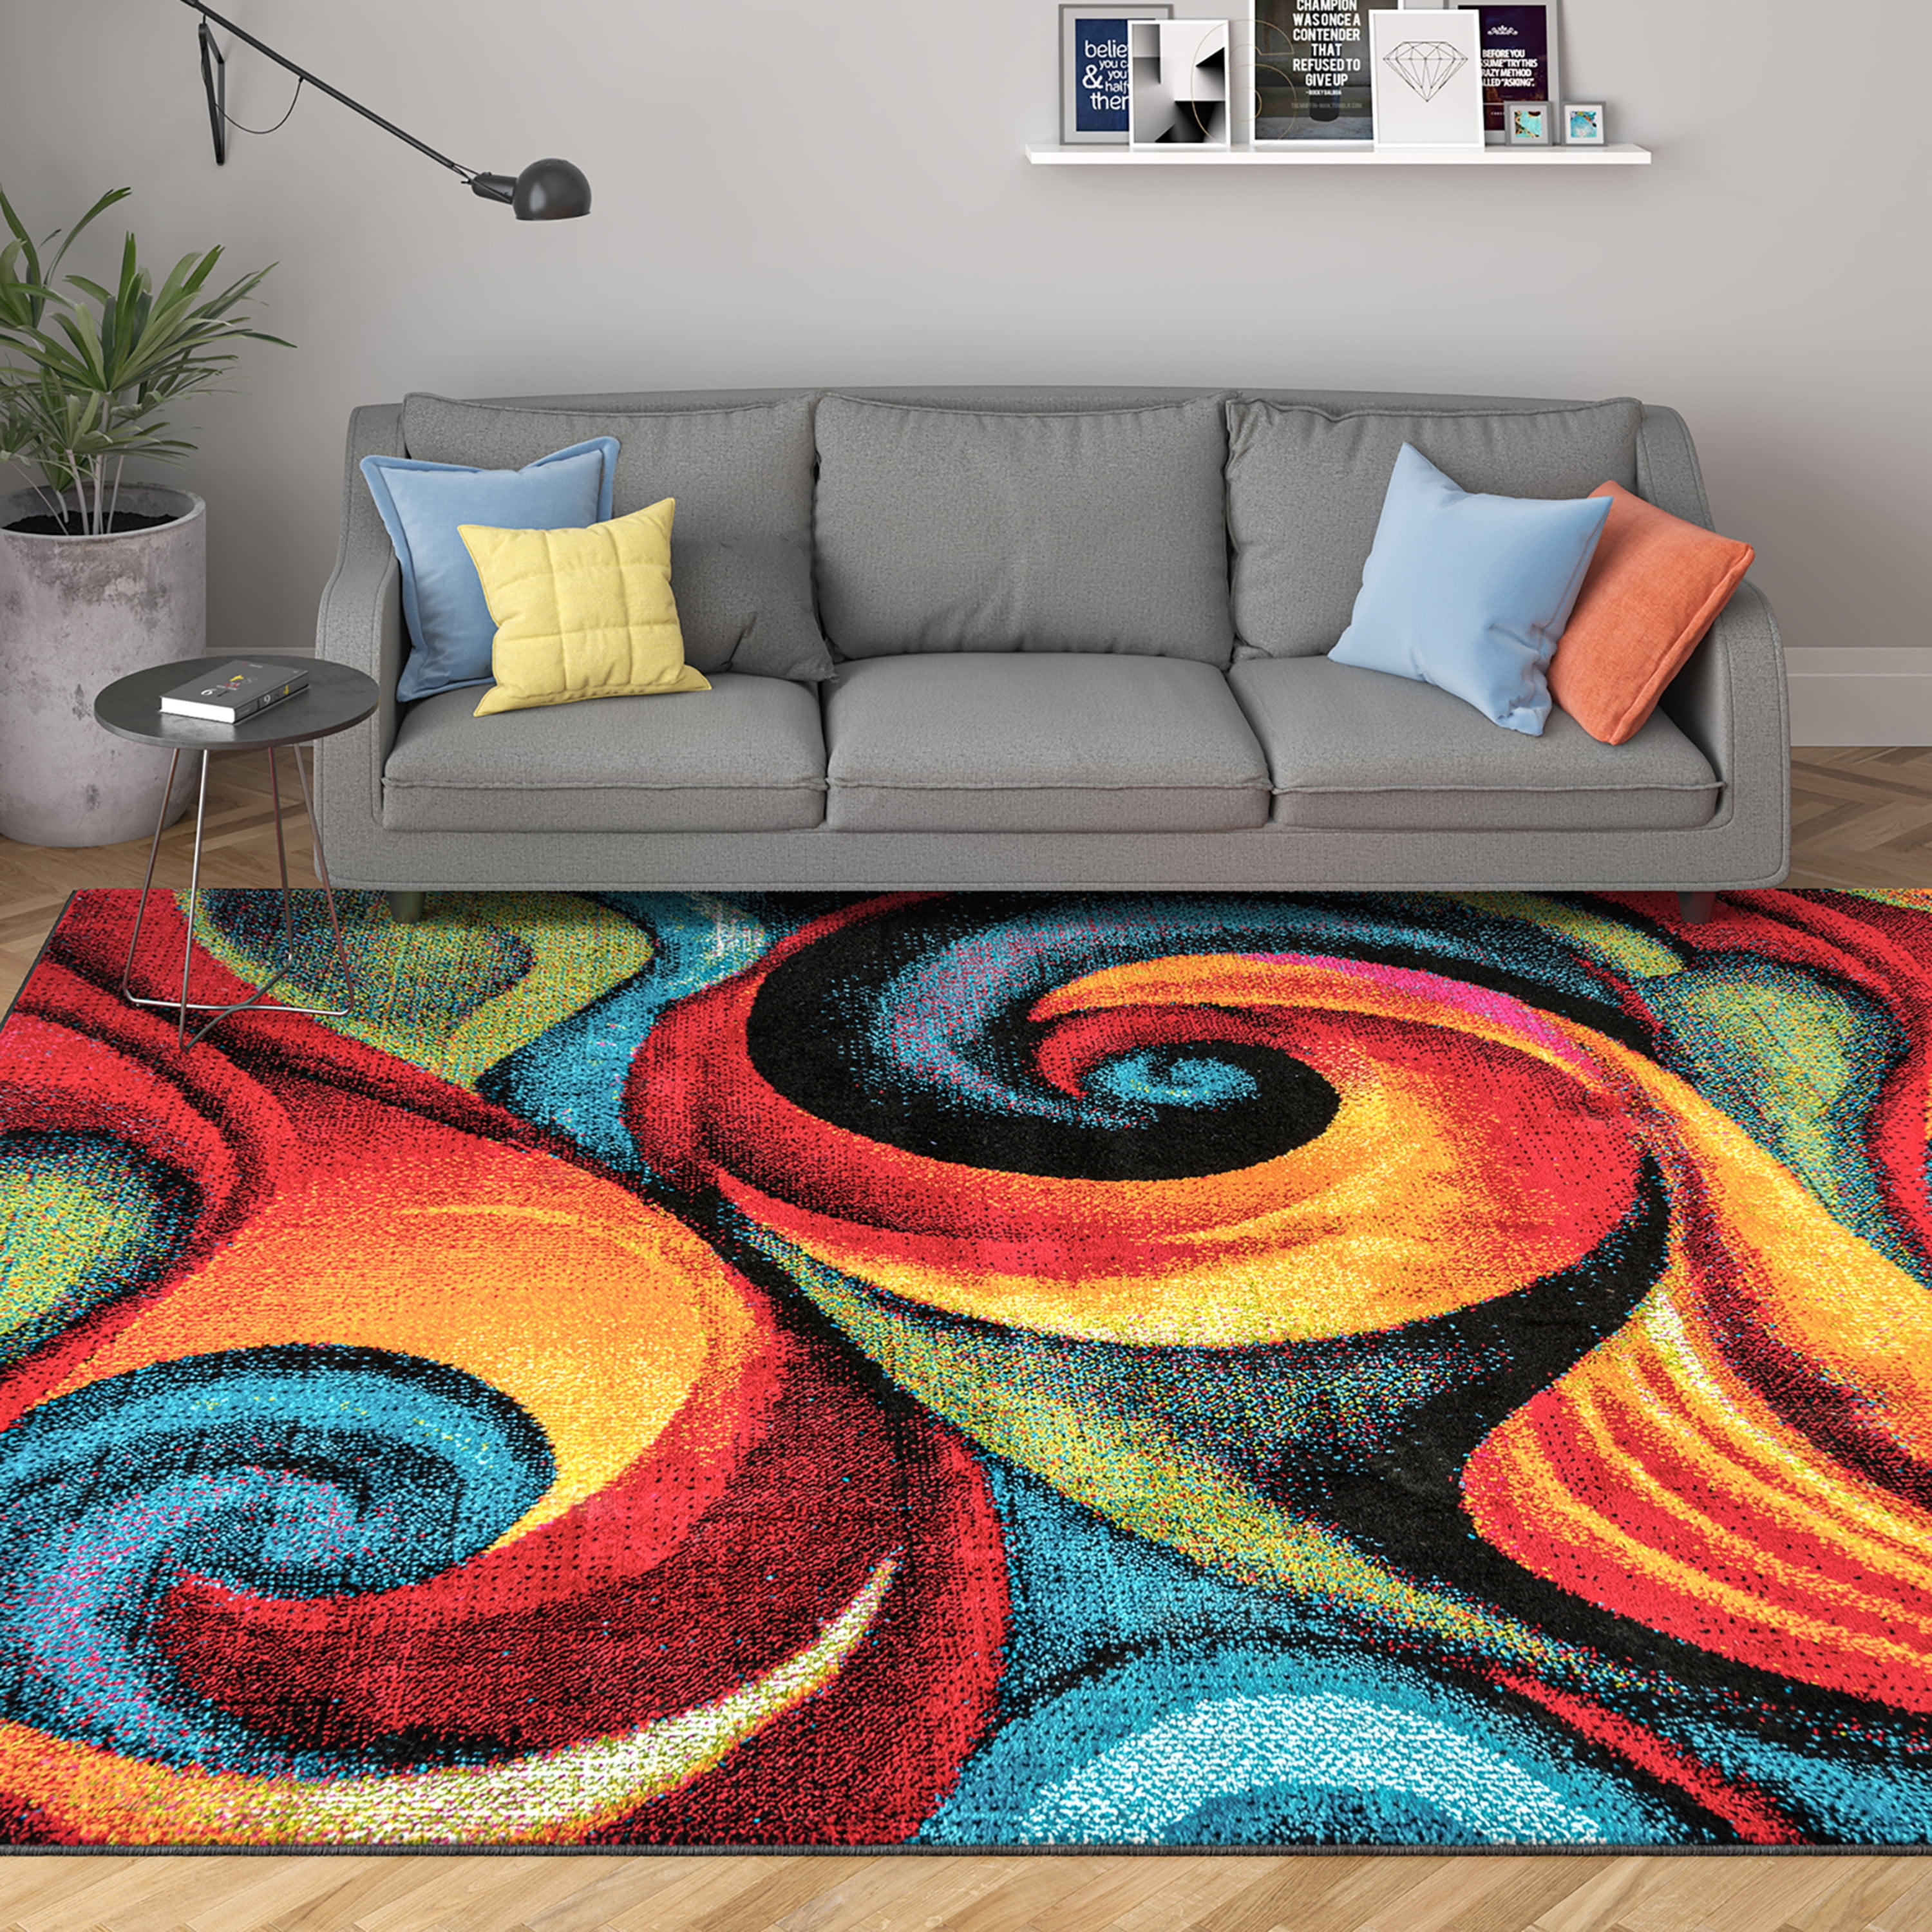 Colorful Dog Rug Sport Decor Gift Floor Decor Living Room Carpet Rug Area  Rug - 0f3b91692f50